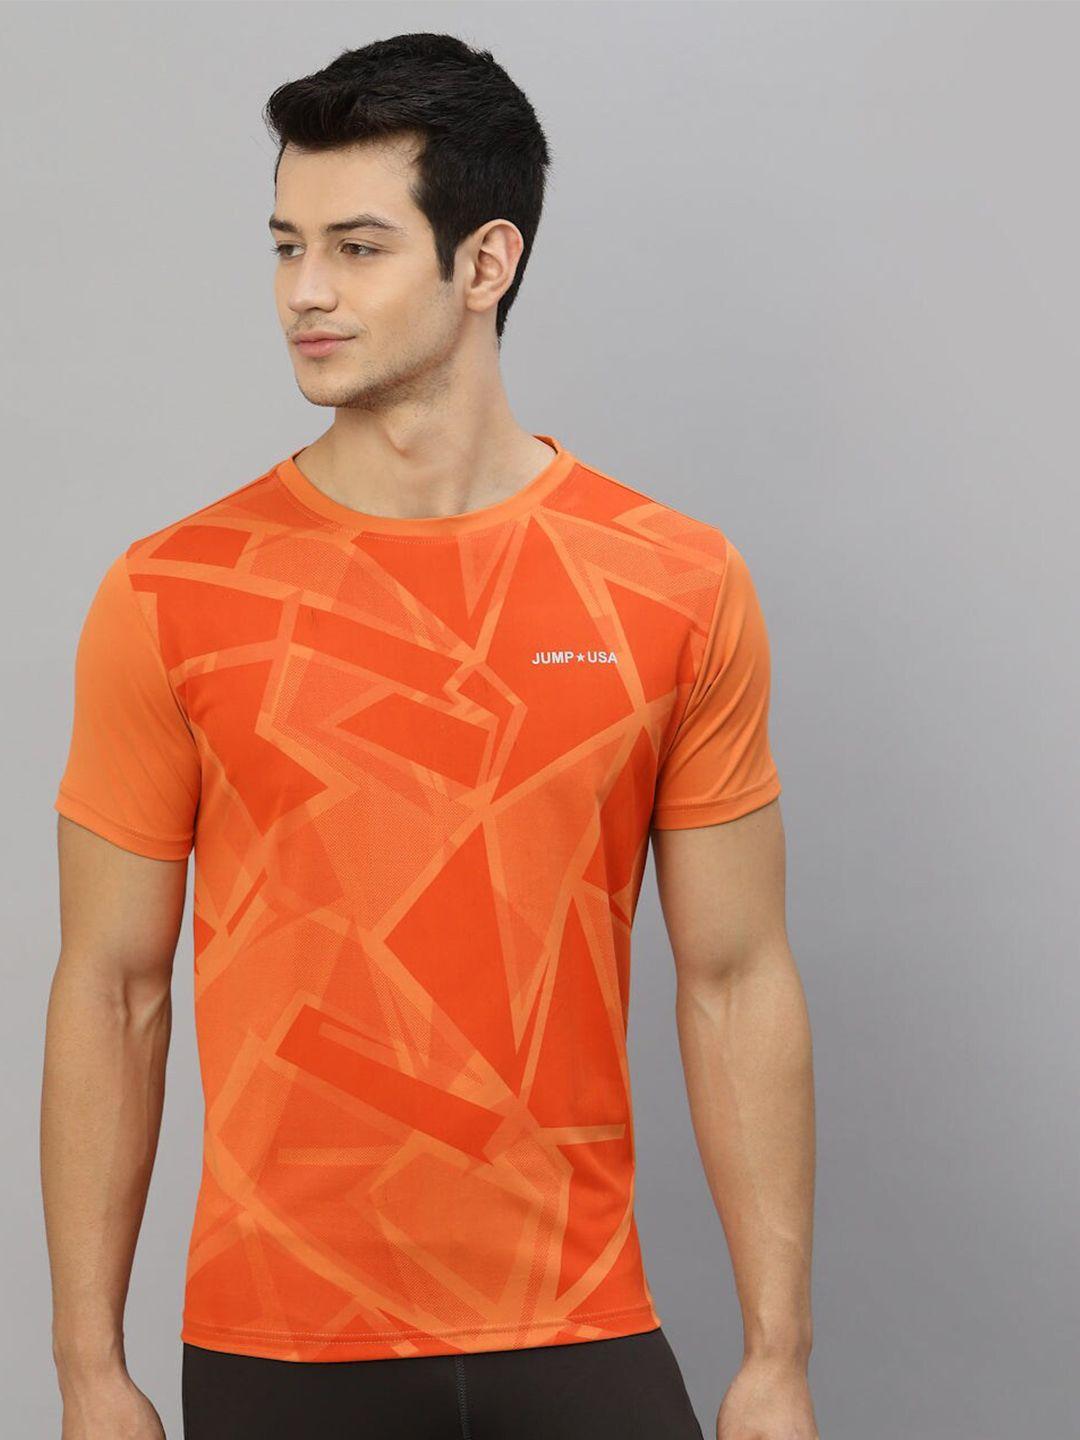 jump usa geometric printed round neck rapid-dry t-shirt